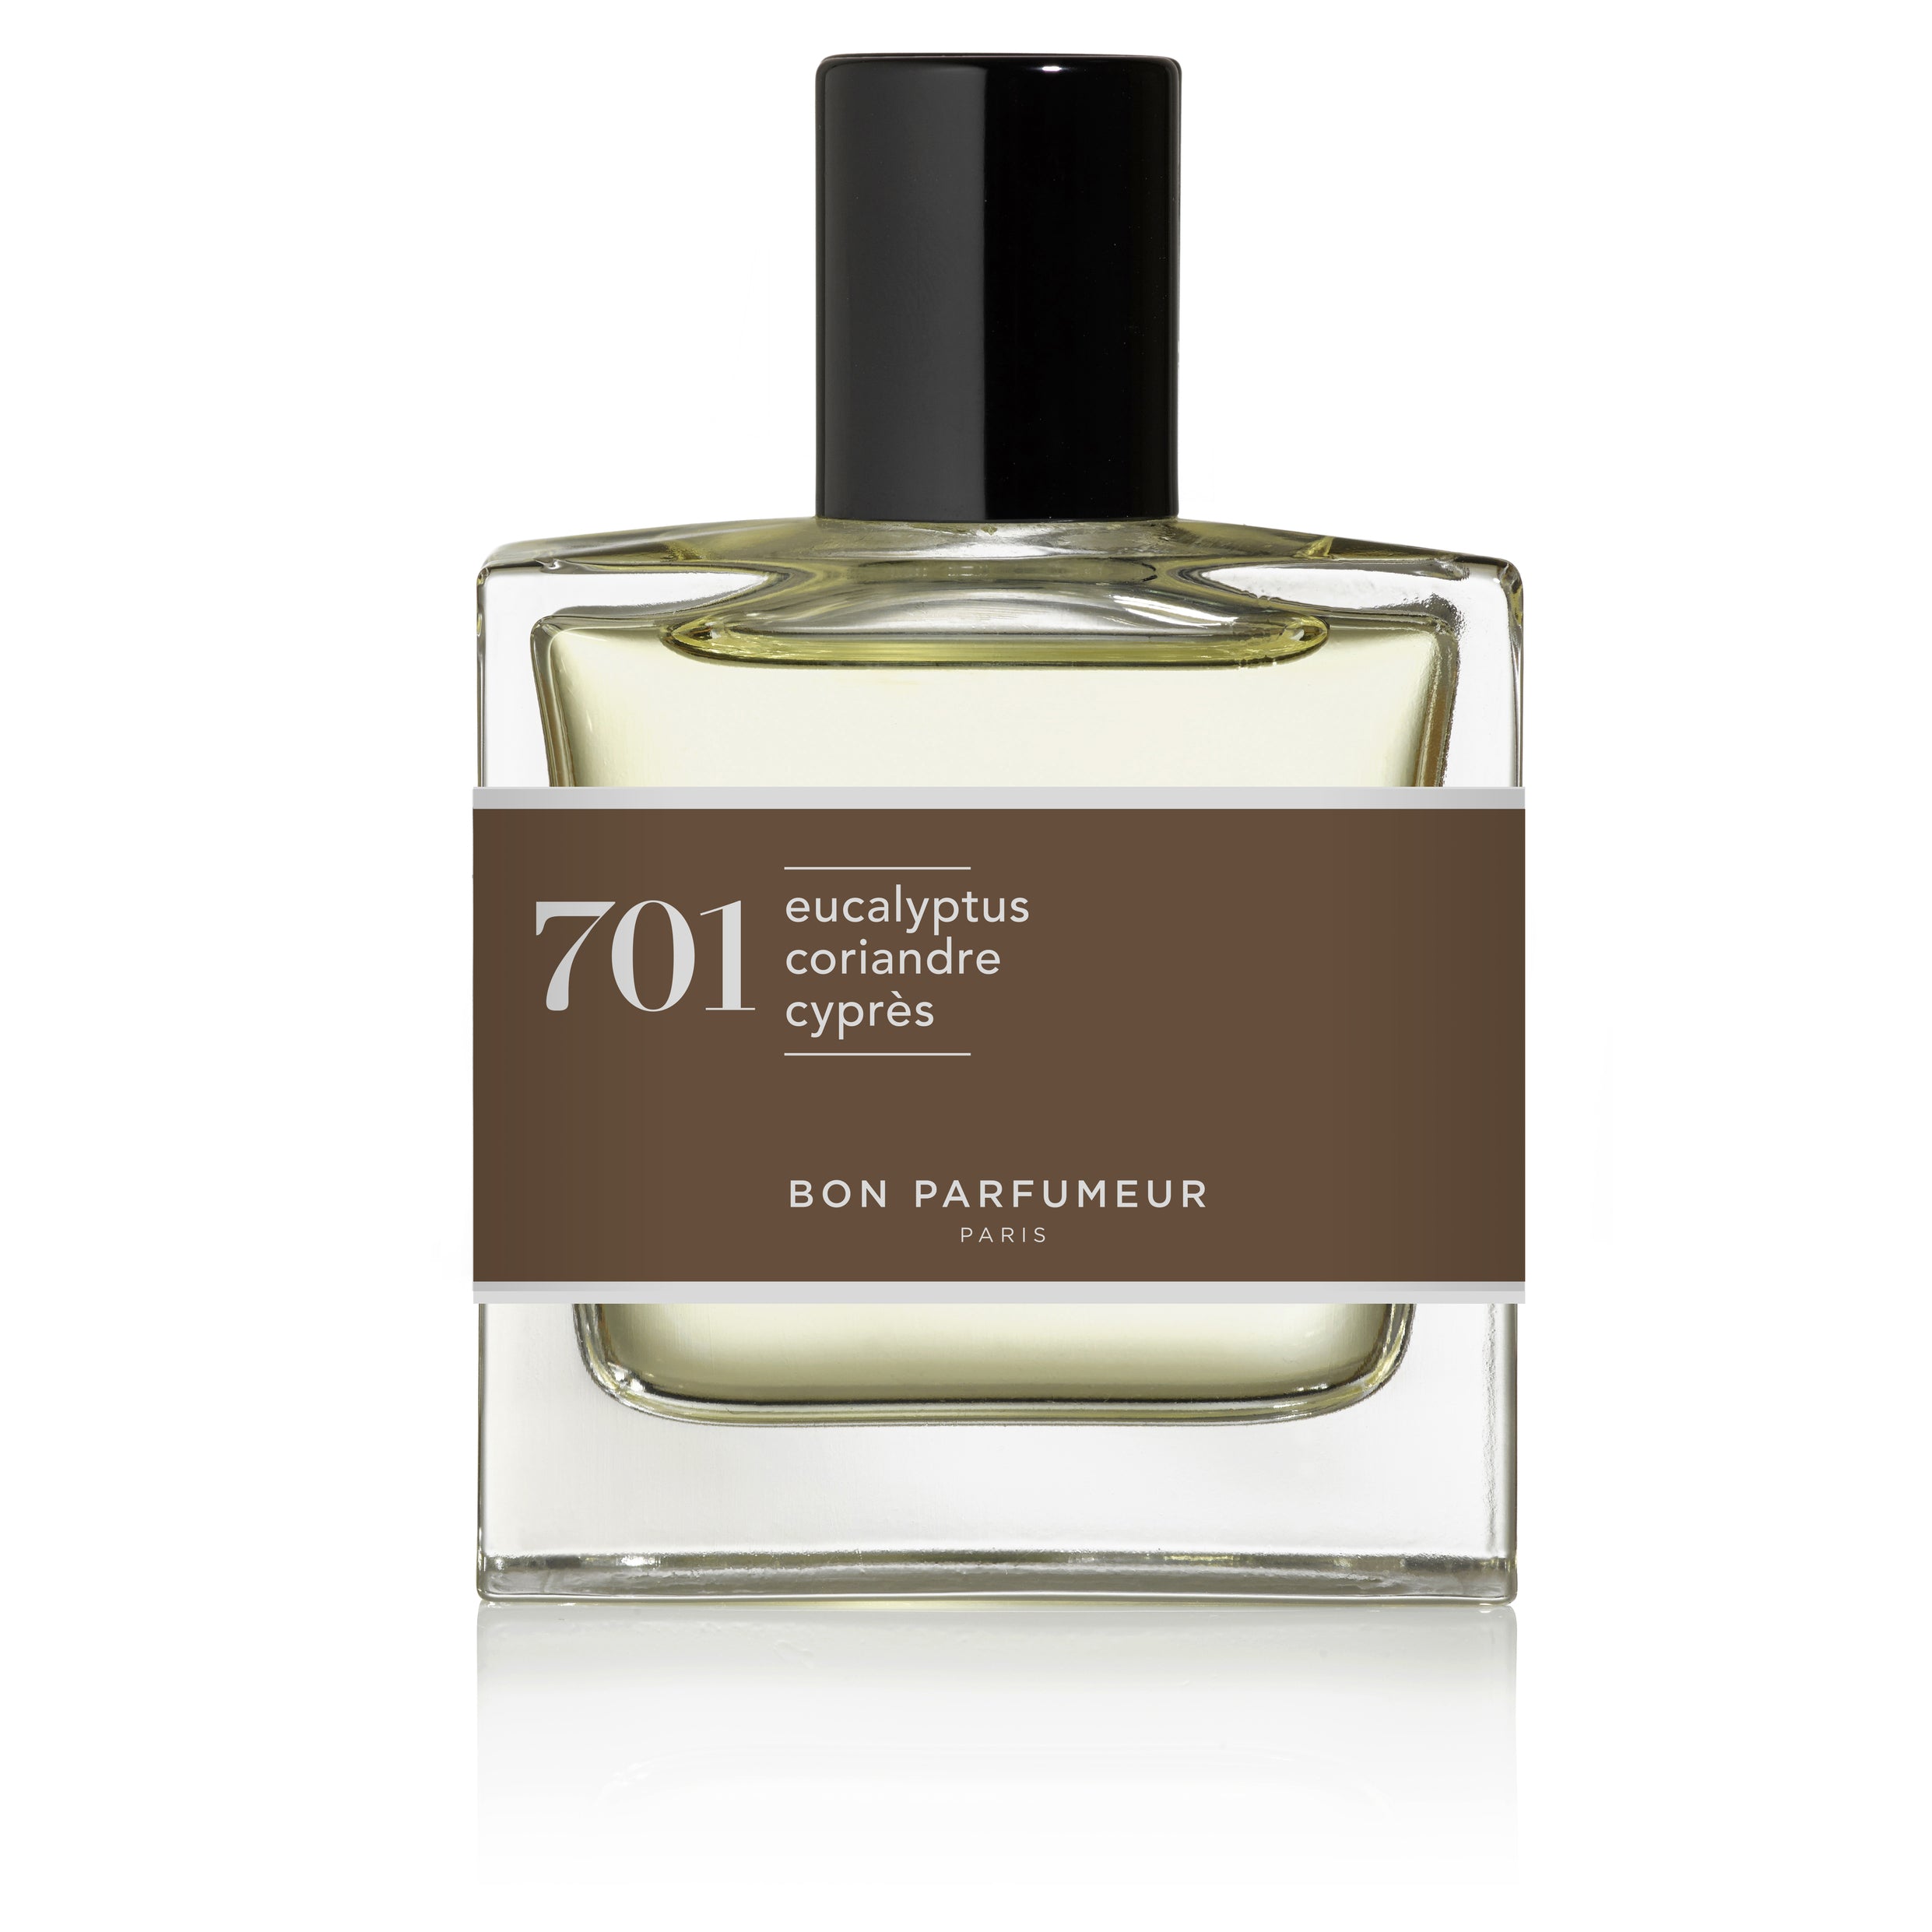 Bon Parfumeur - Les Classiques 701 - Danae Profumeria